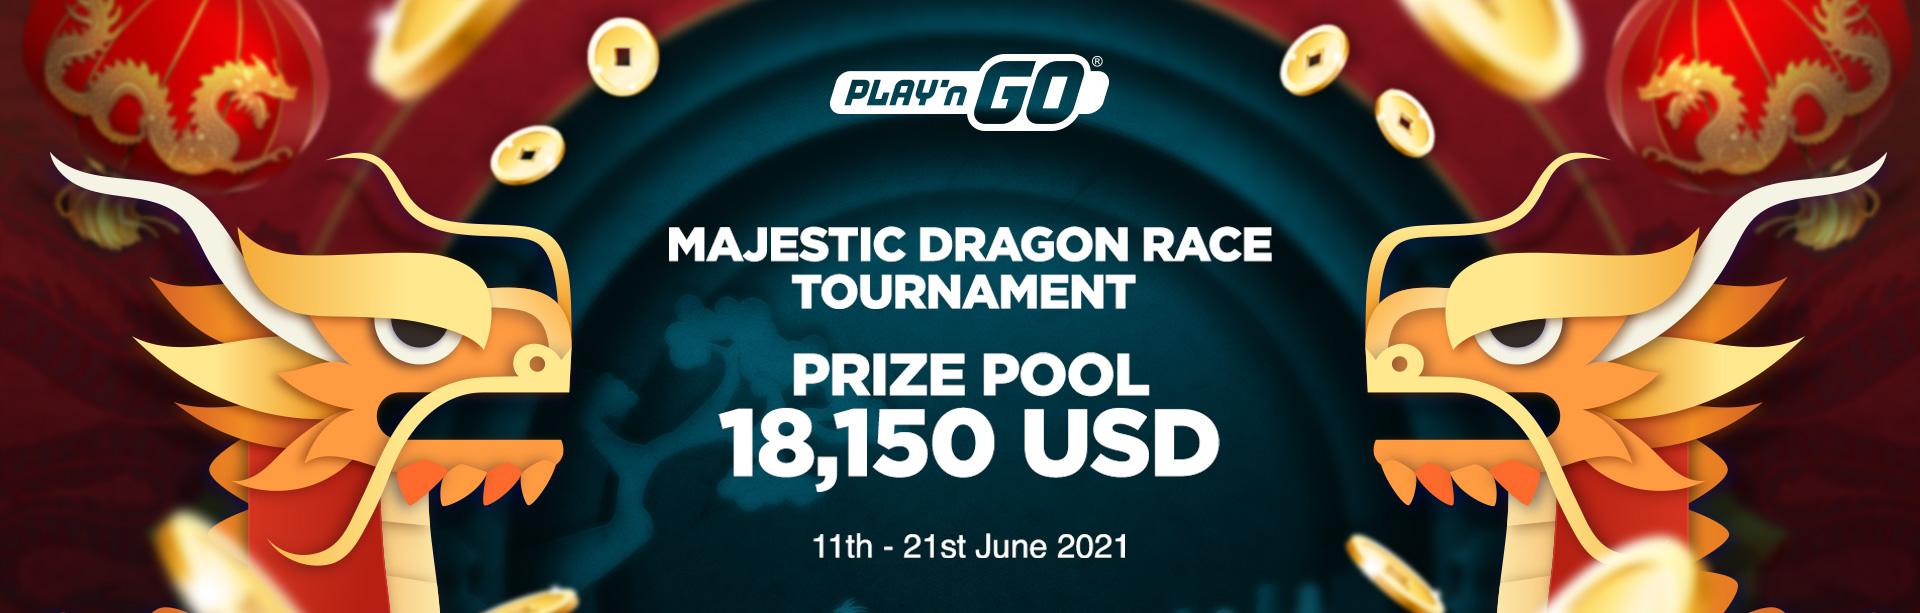 Play n Go Majestic Dragon Race Tournament